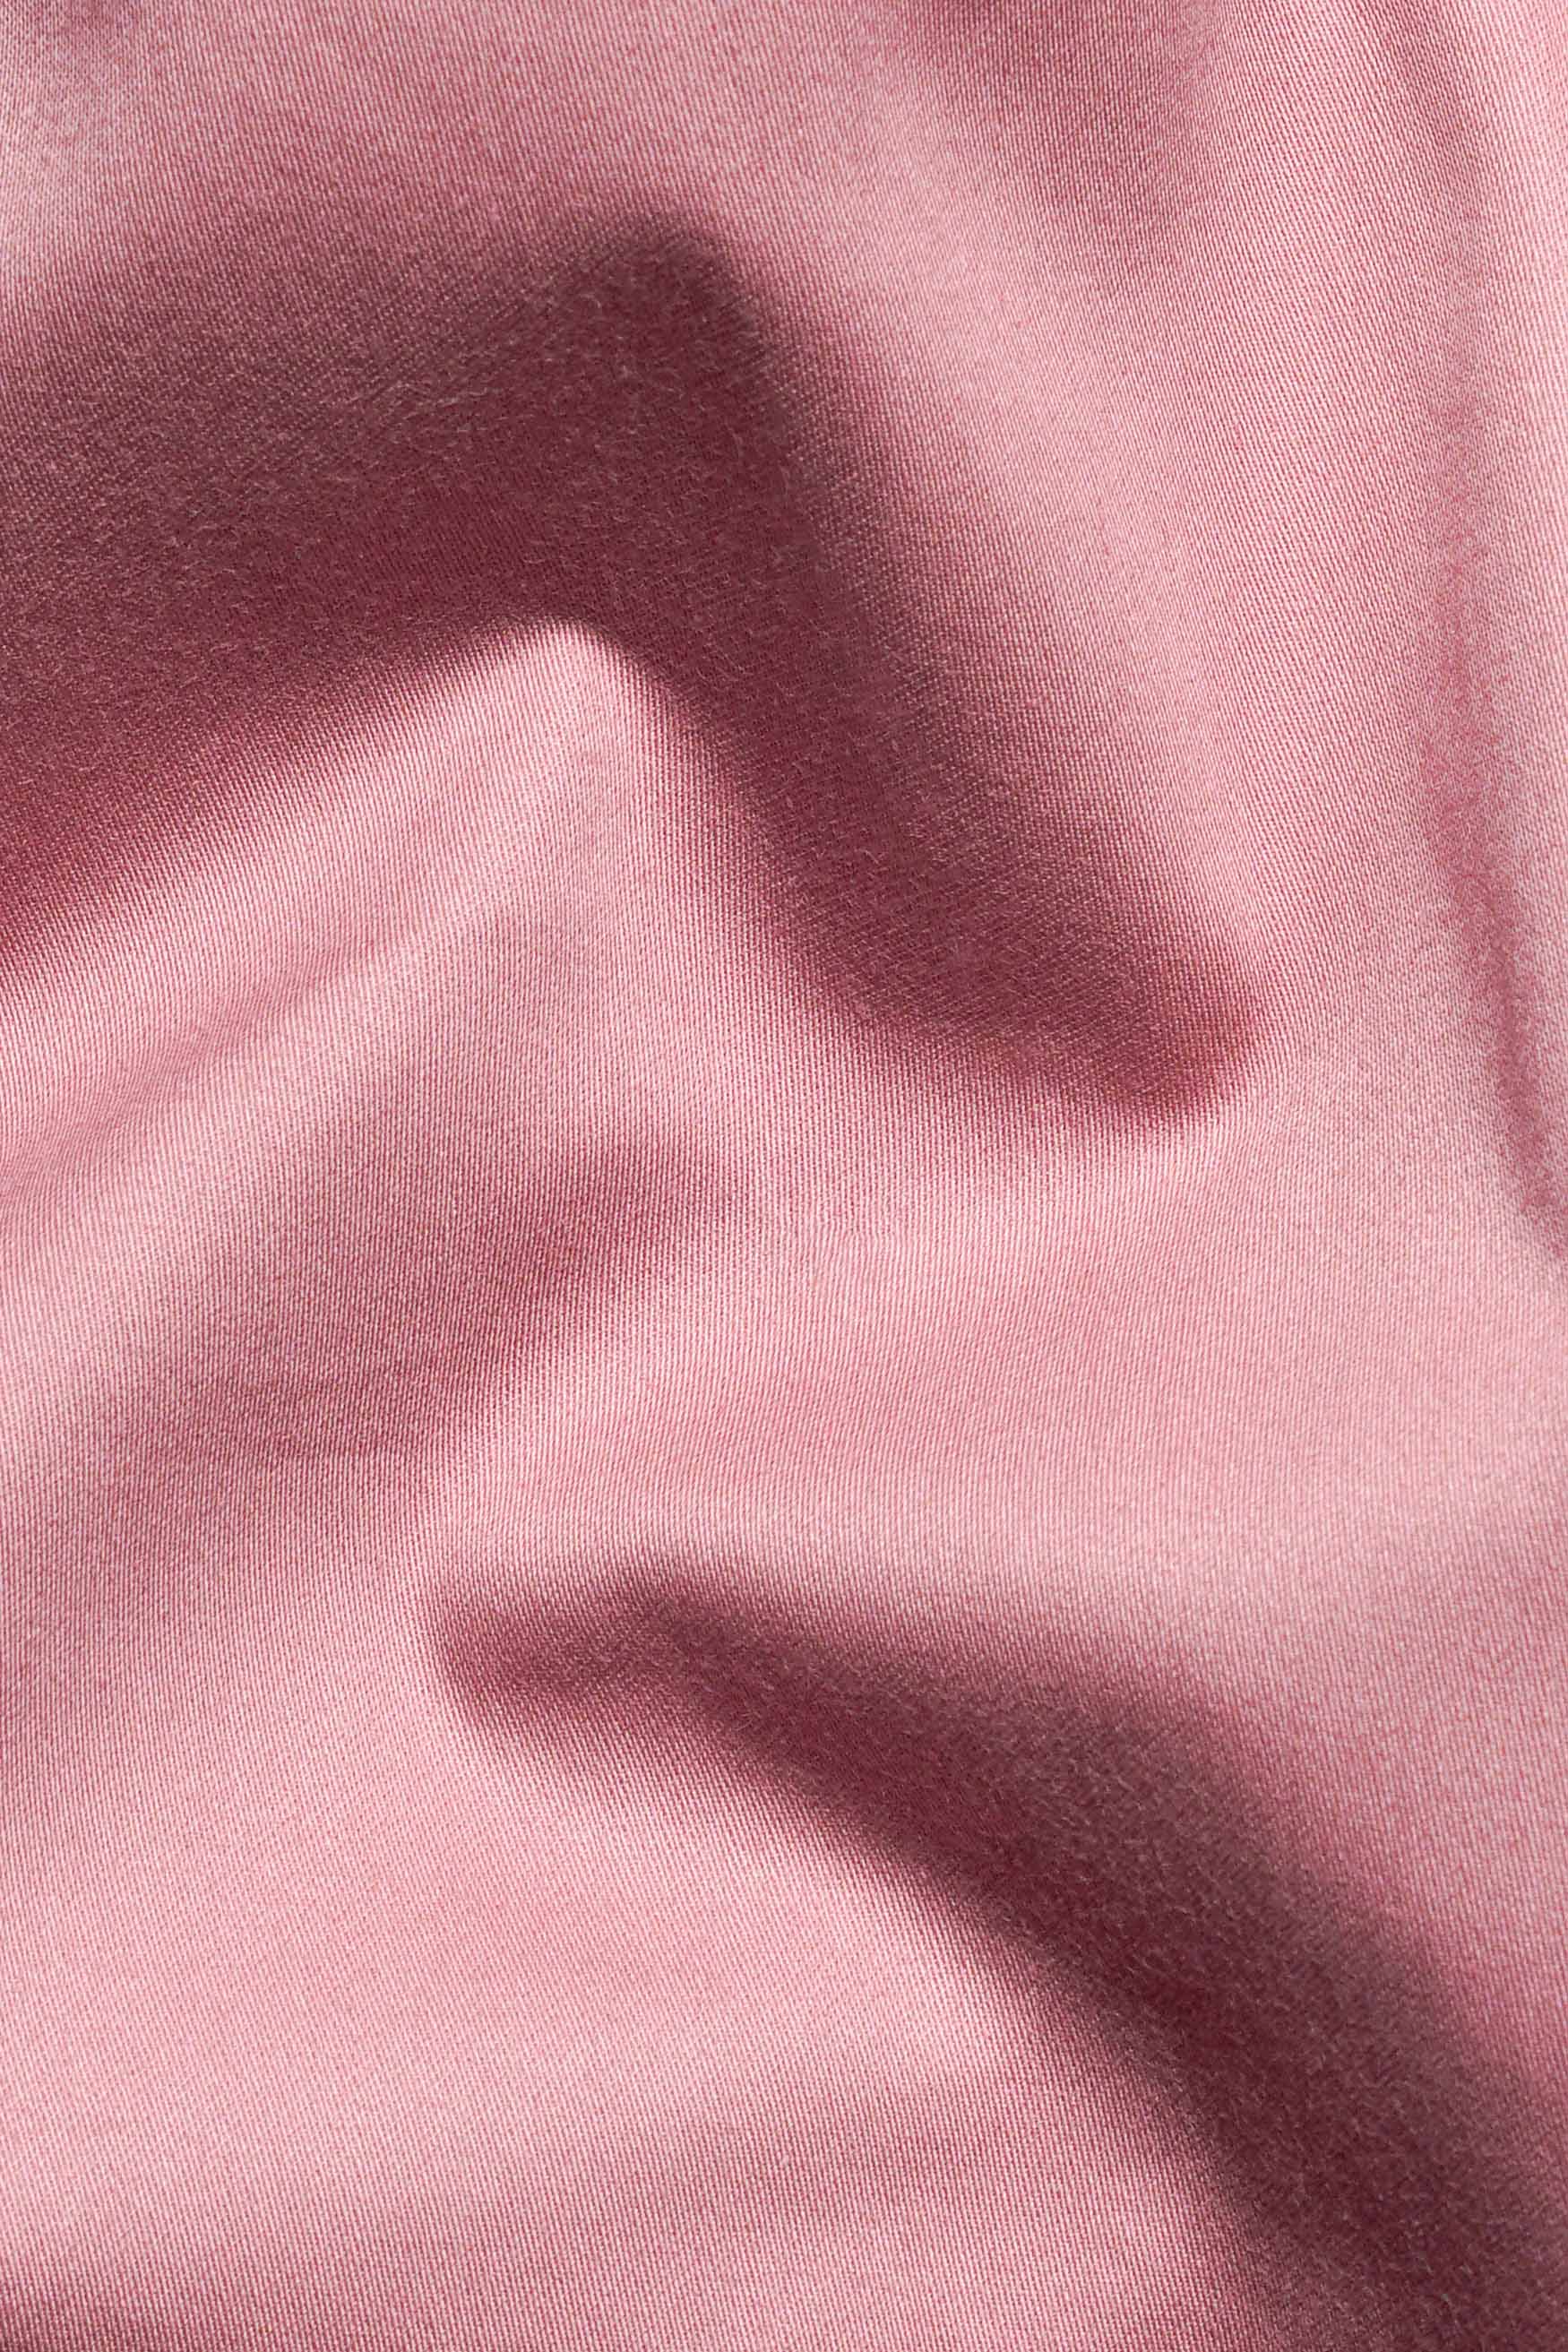 Shilo Pink Subtle Sheen Super Soft Premium Cotton Mandarin Shirt